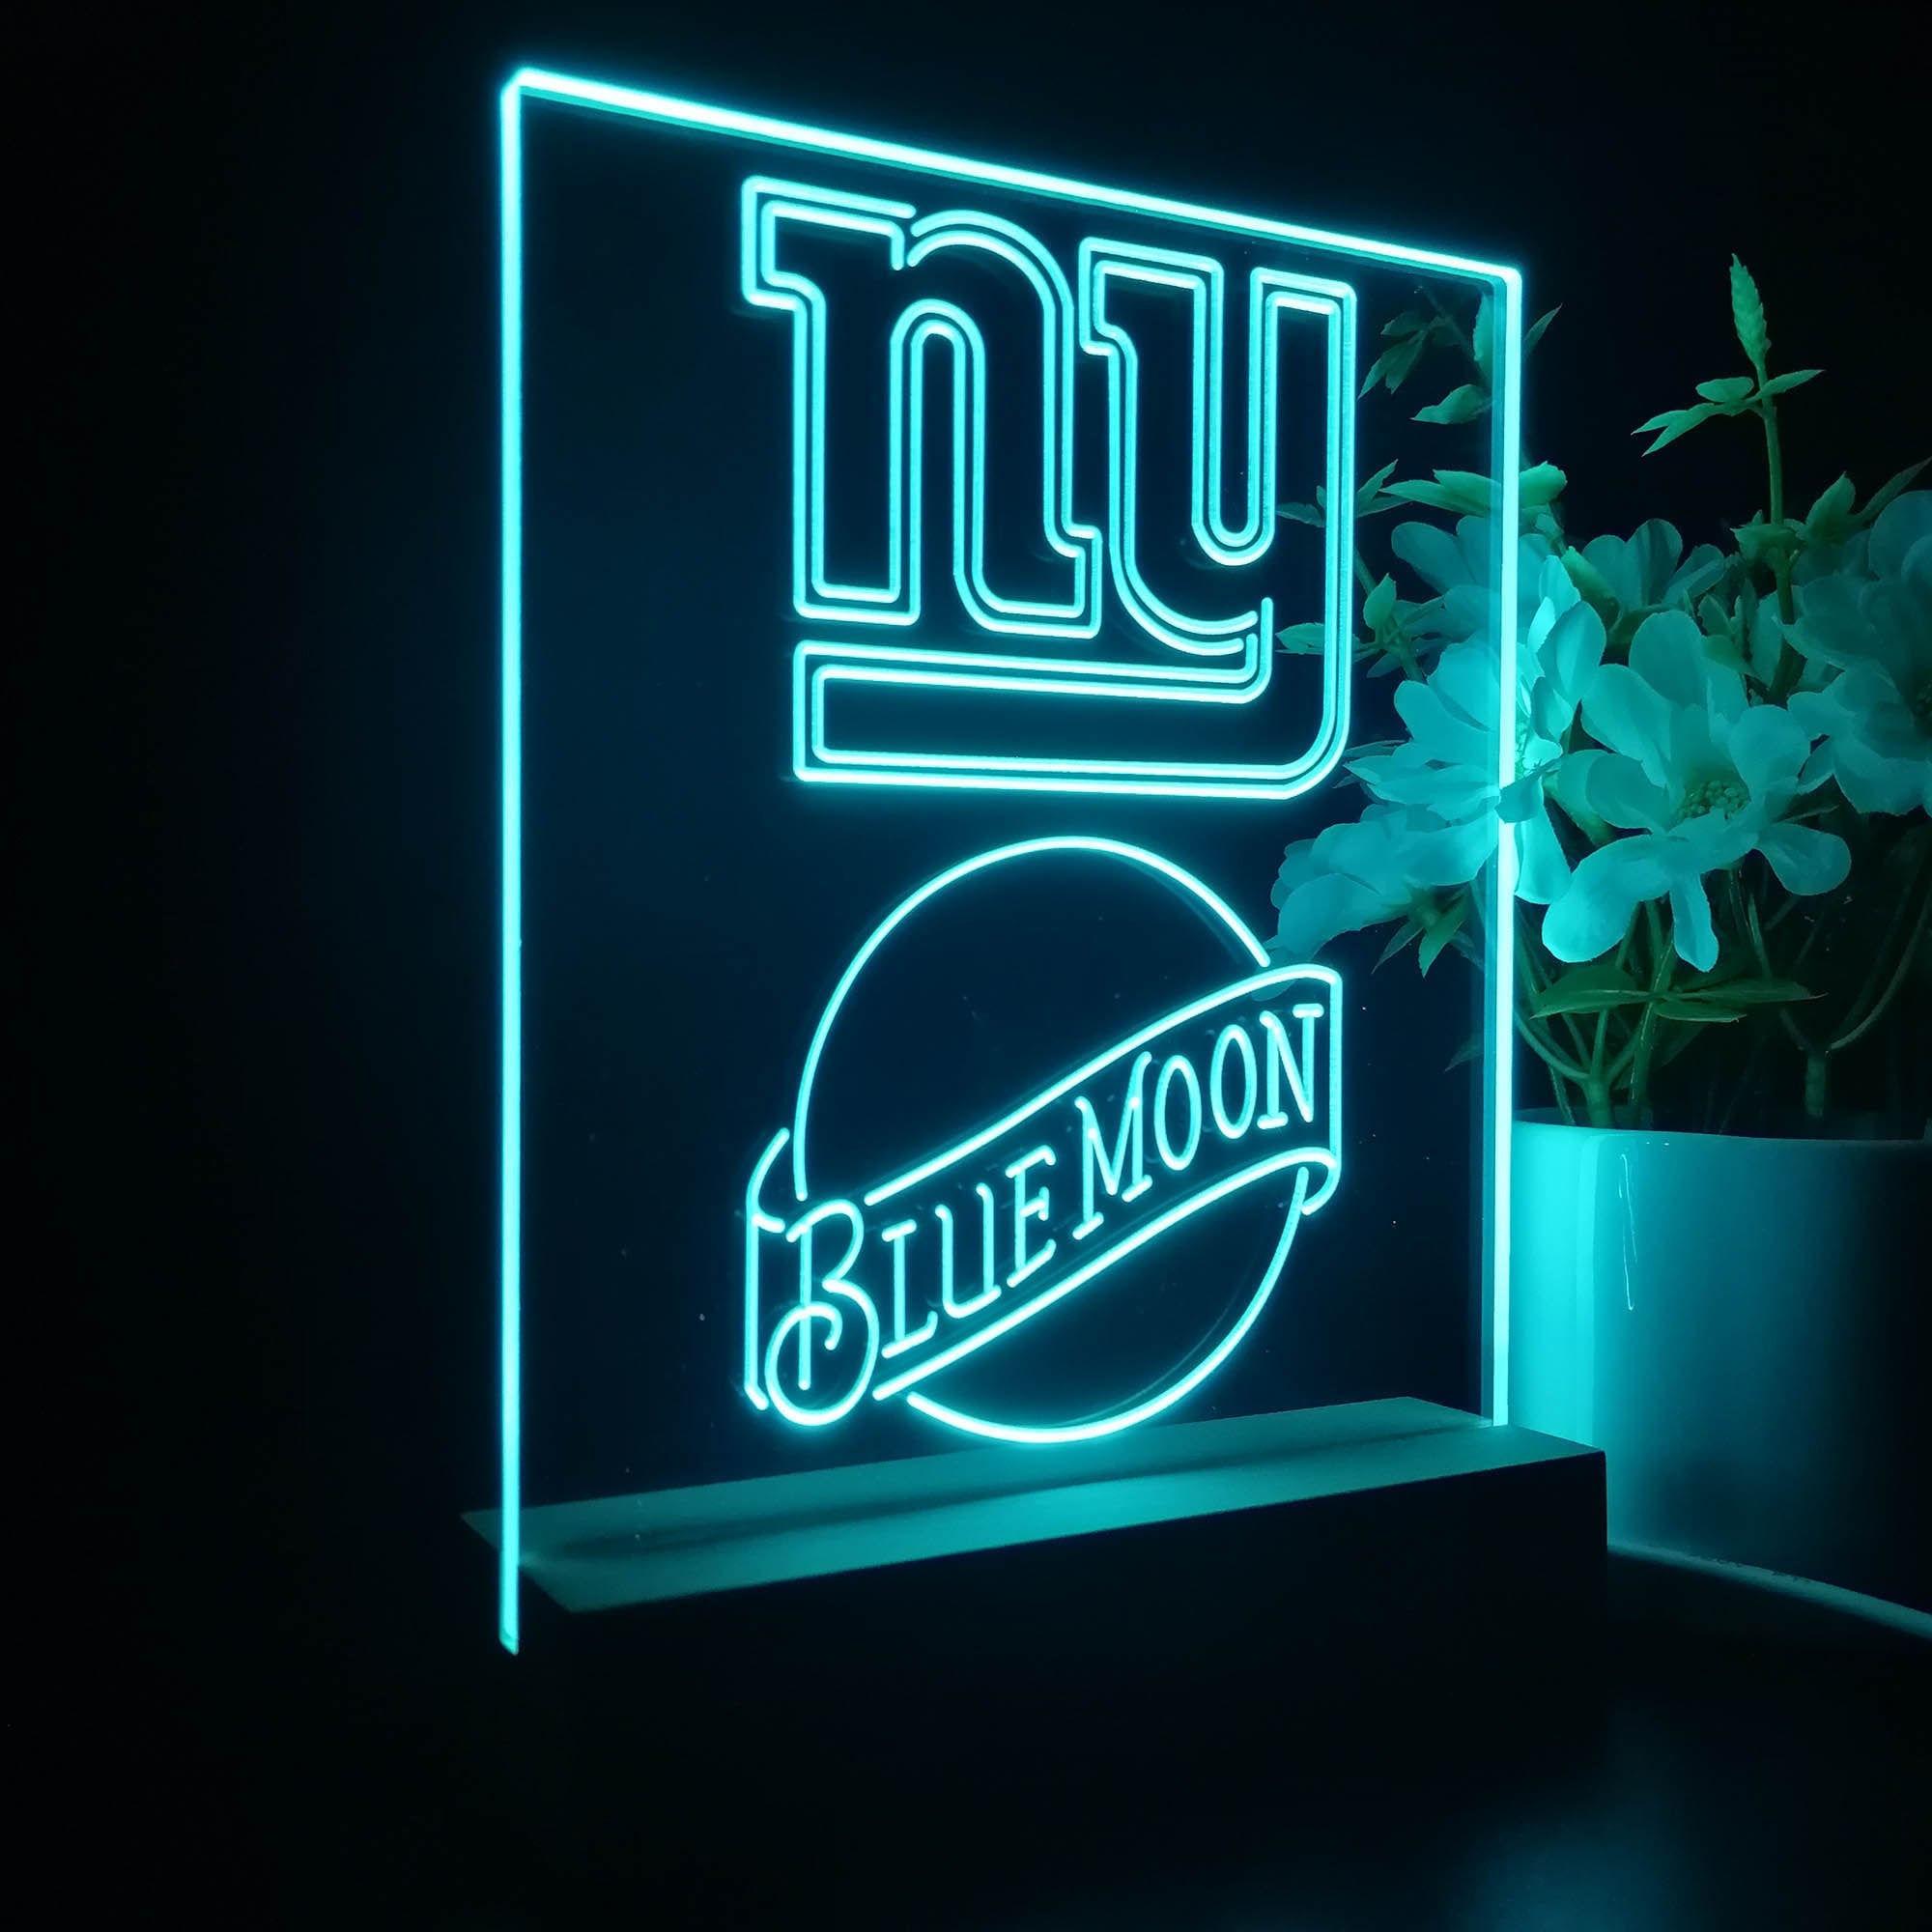 New York Giants Blue Moon Neon Sign Pub Bar Lamp